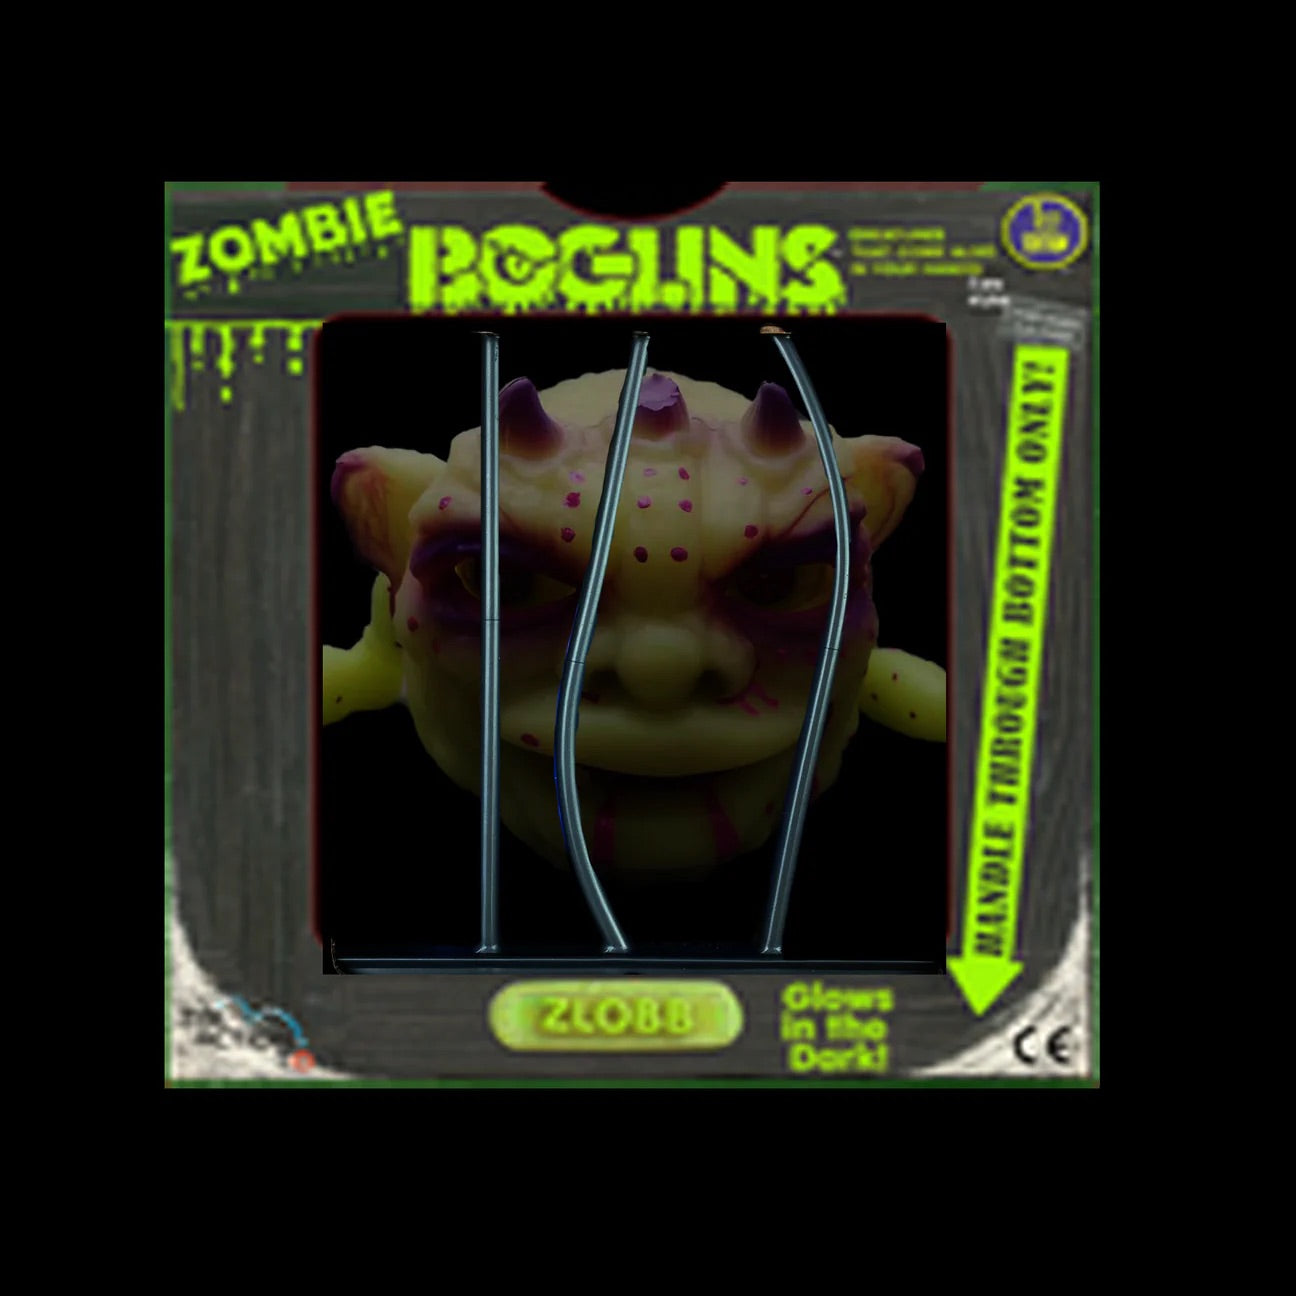 Boglins Zombie Zlobb in Cage